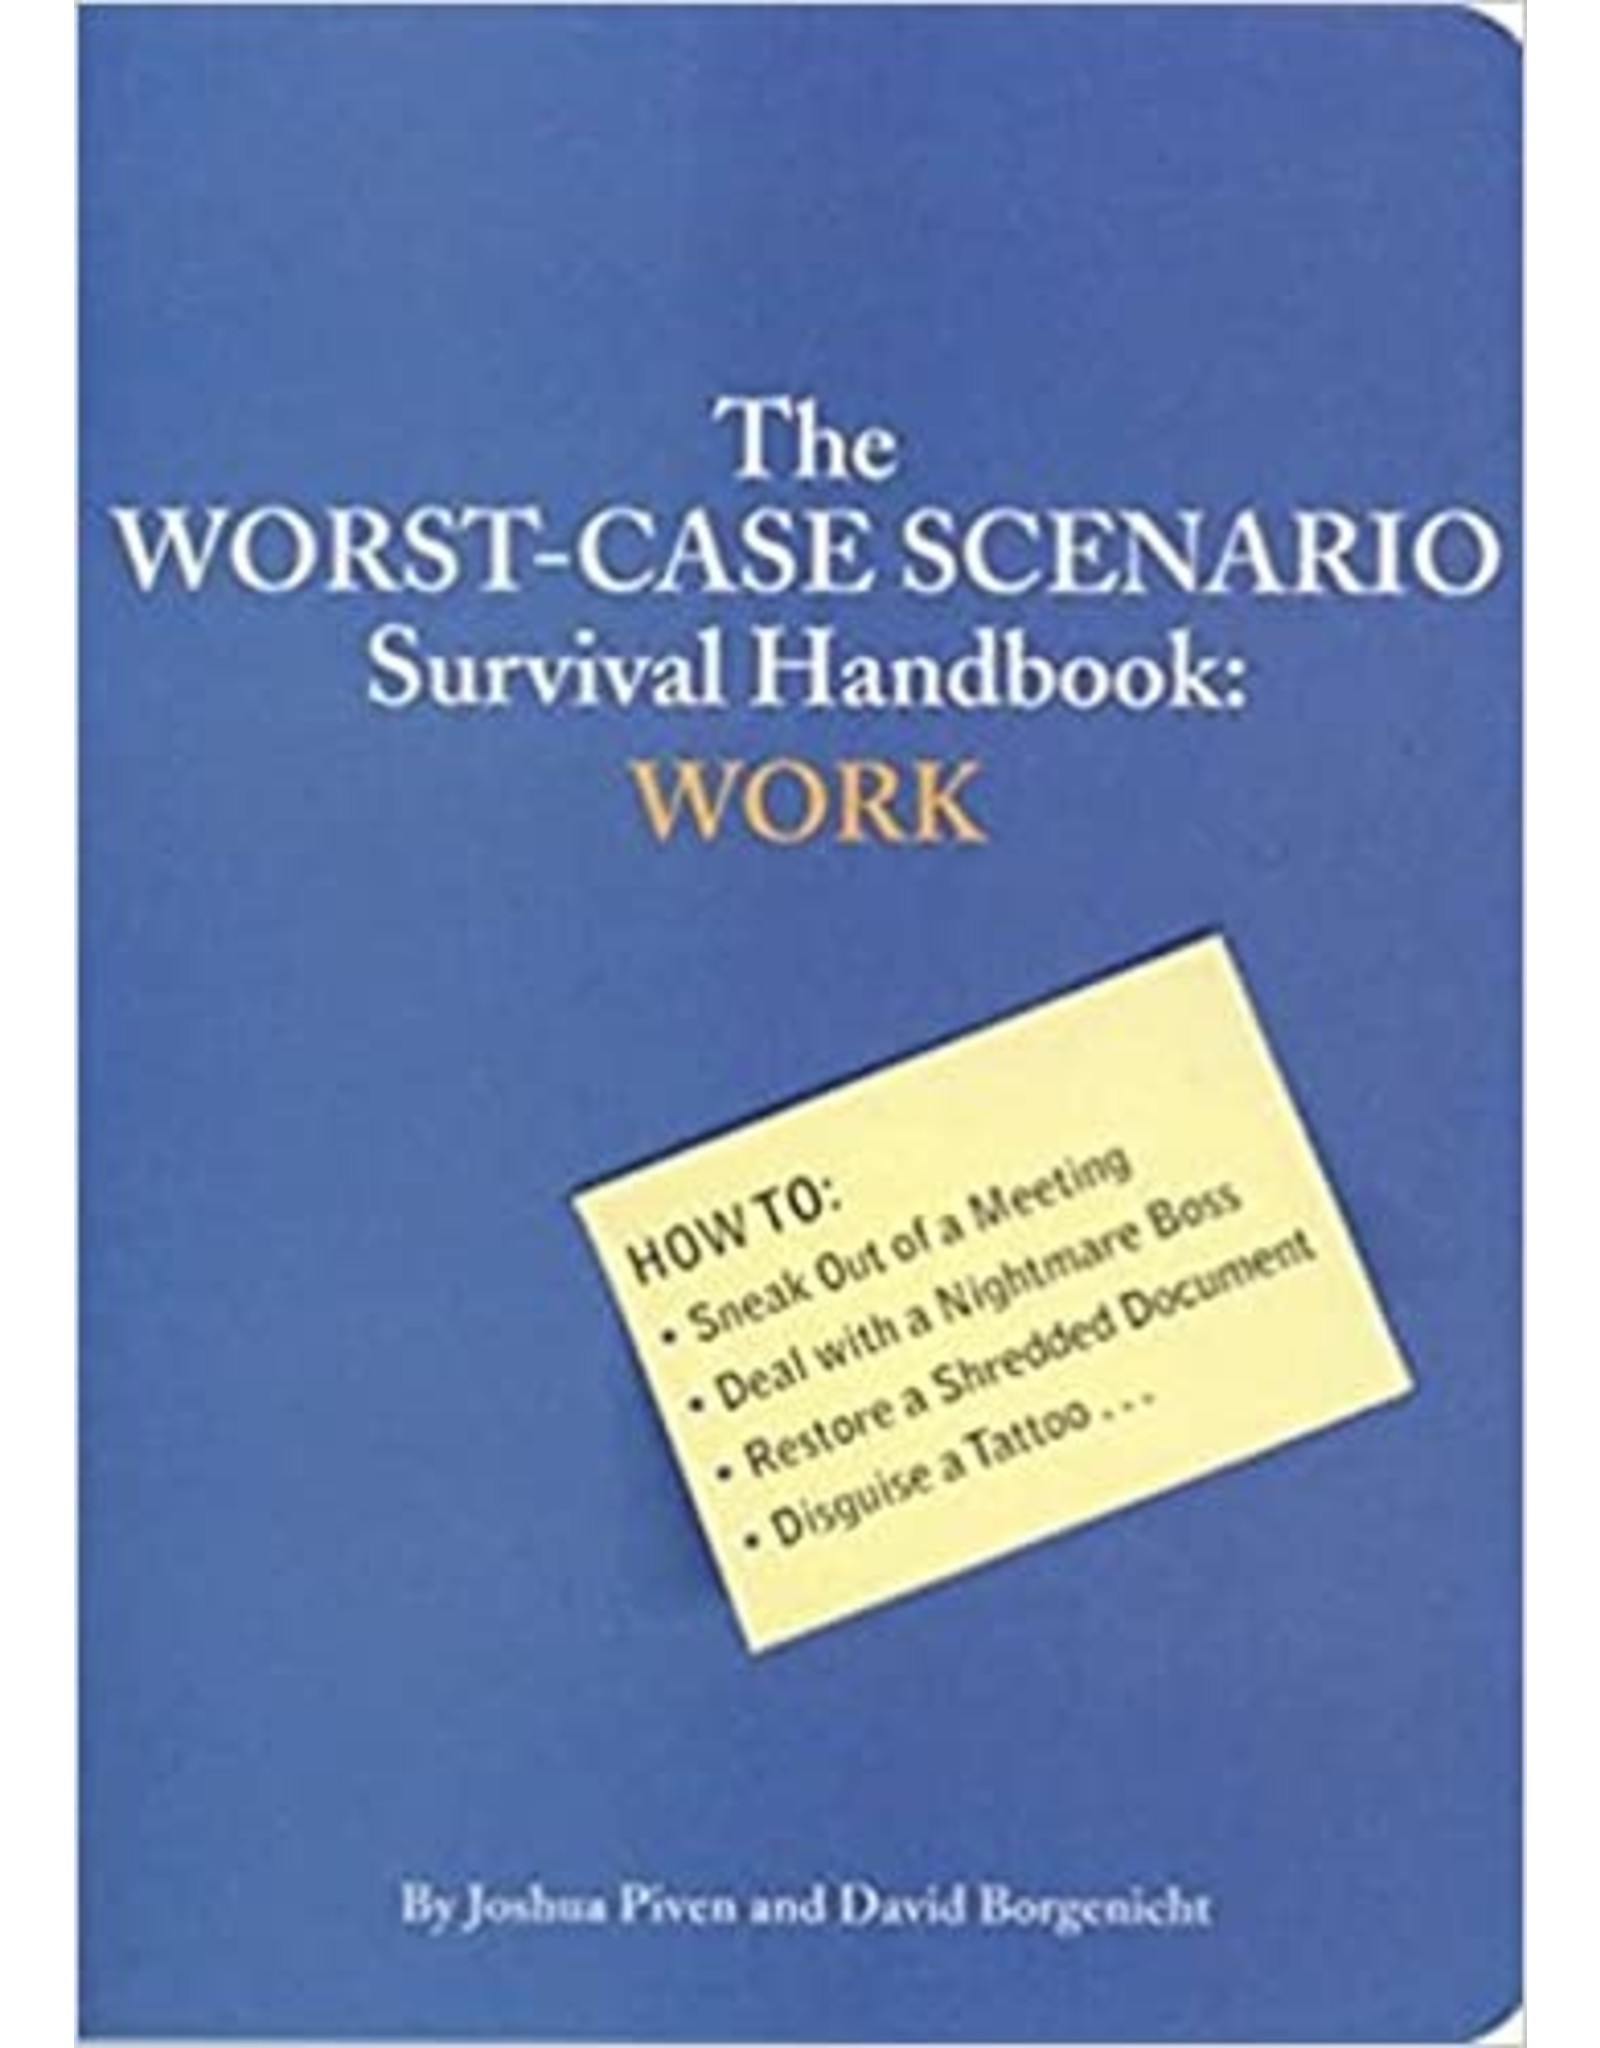 Literature The Worst-Case Scenario: Work